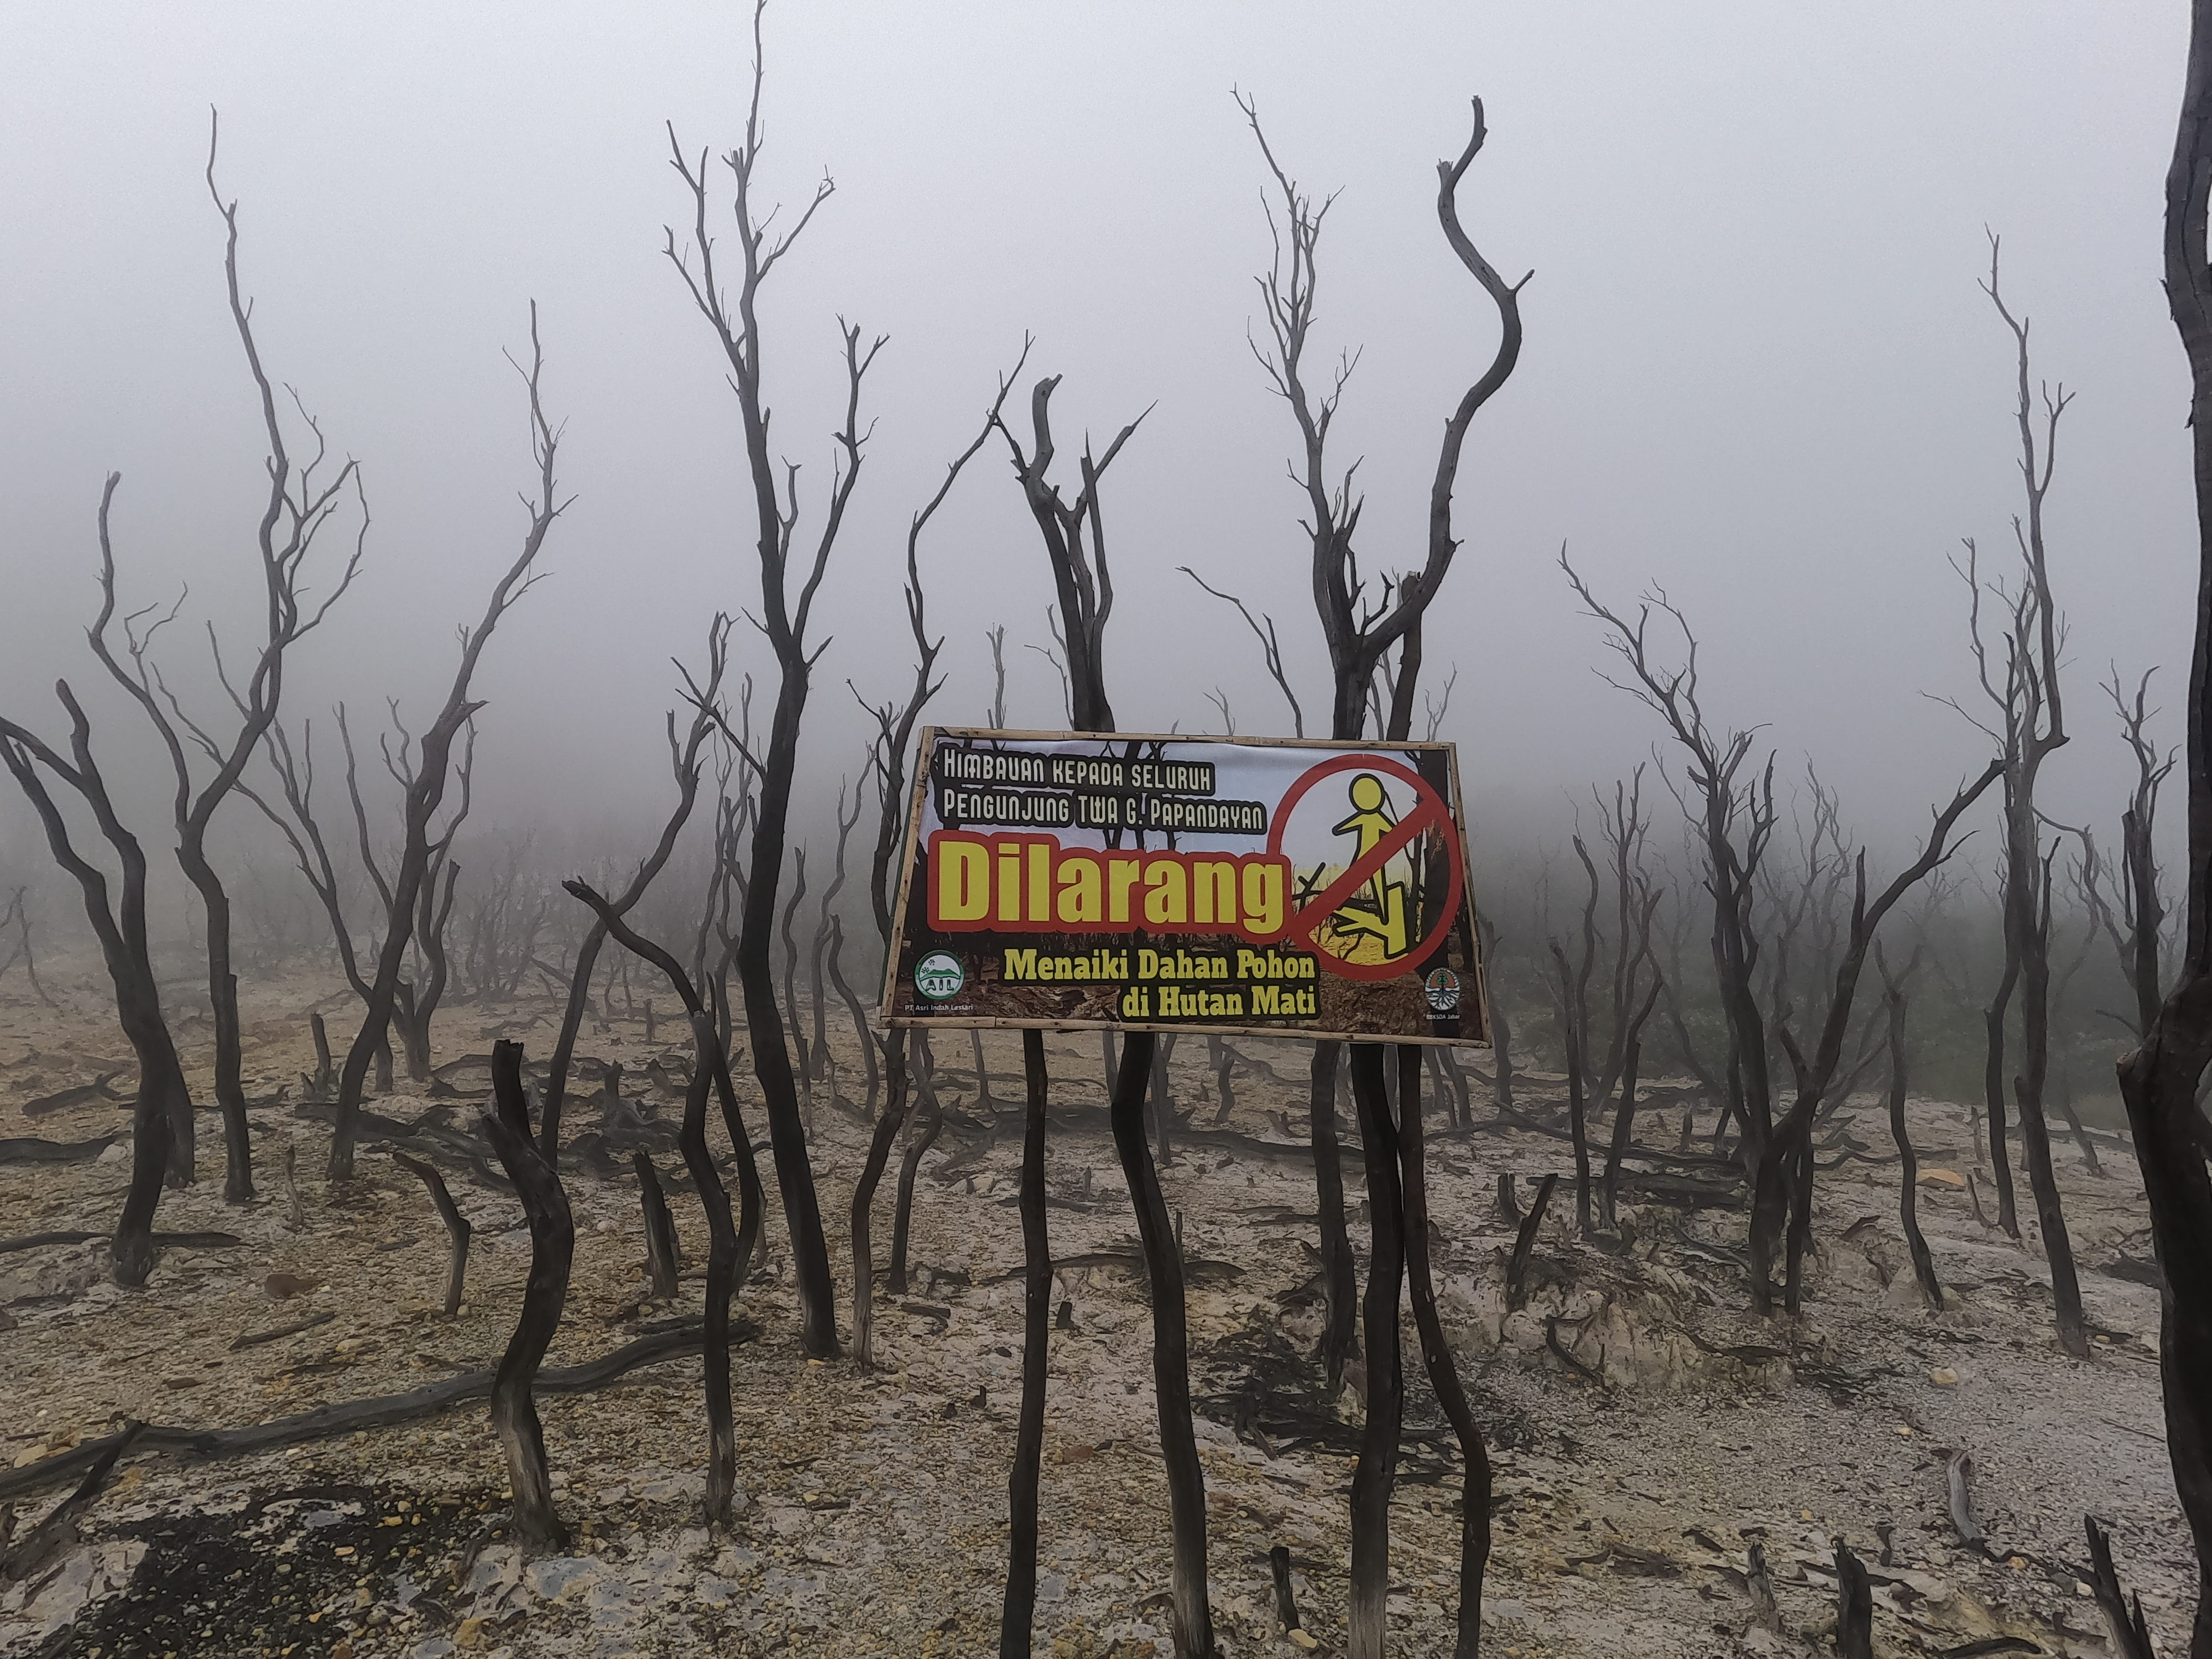 Photo 24: Larangan untuk menaiki dahan pohon di hutan mati, karena kondisinya yang sudah lama terbakar dan mulai lapuk dikhawatirkan akan terjadi kecelakaan